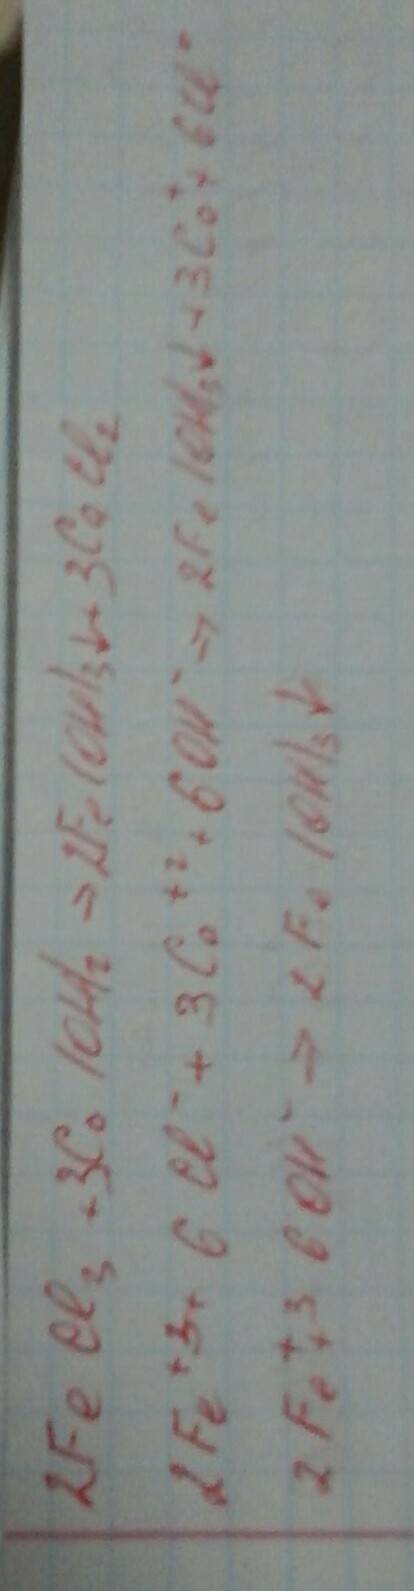 (10 класс) скласти рівняння йонного обміну між ( ионное уравнение зделать) 2fecl3 + 3ca(oh)2 =2 fe(o